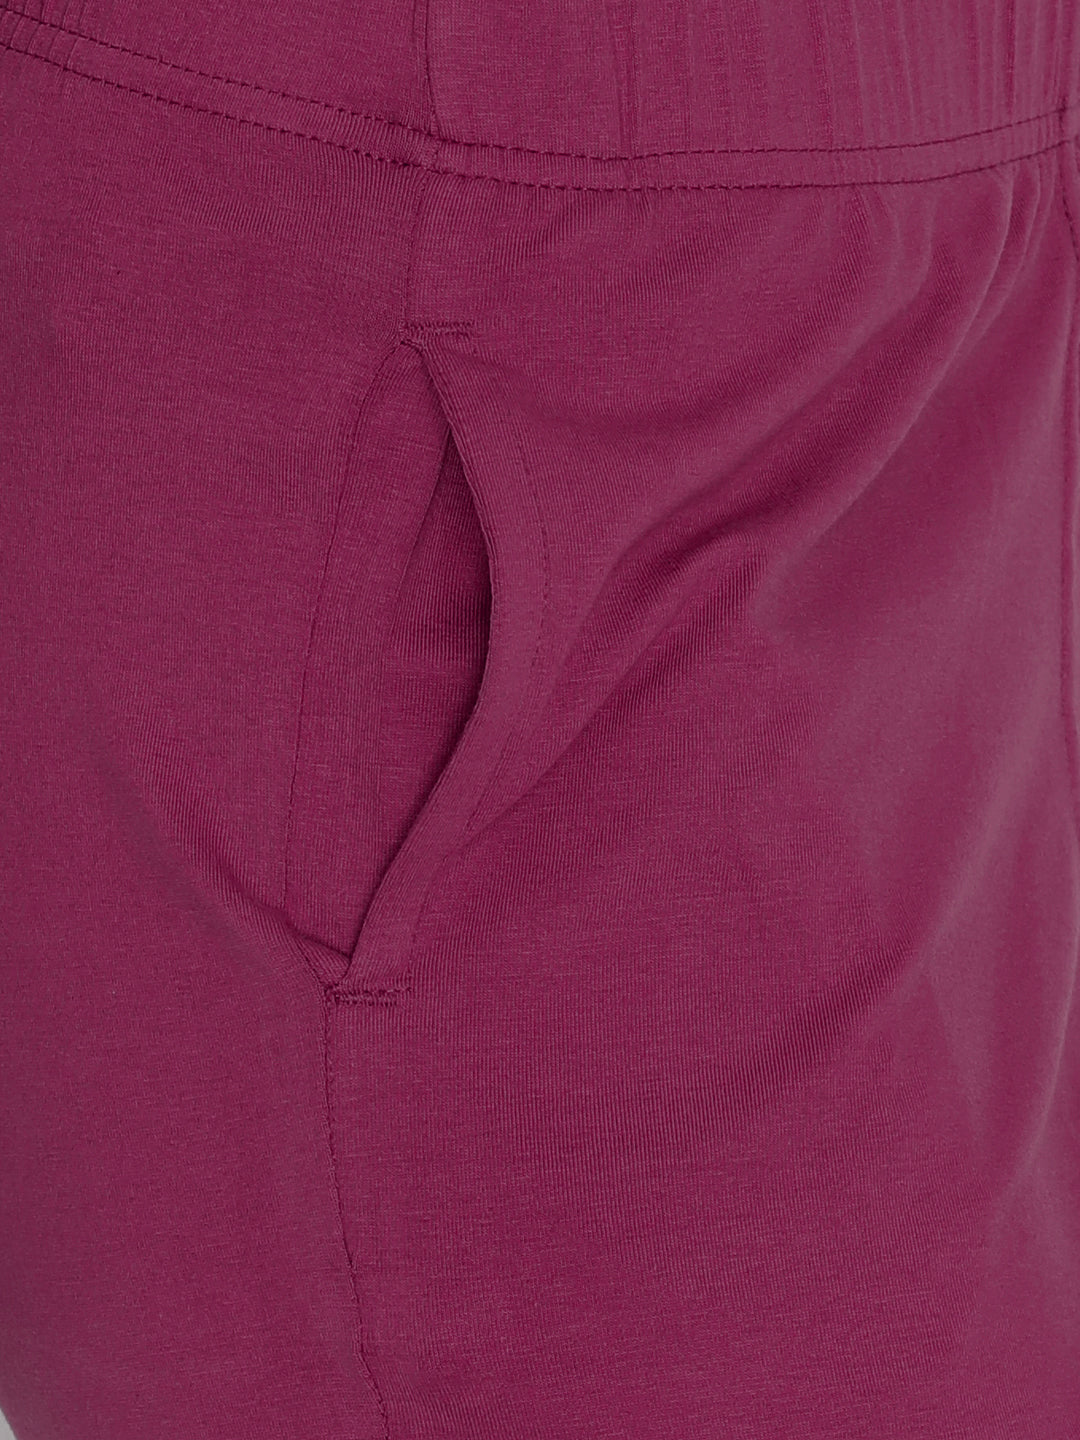 Buy Lyra Hosiery Plain/Solid Women's Regular Fit Free Size Kurti Pants with  Side Pocket (Maroon,Skin) at Amazon.in